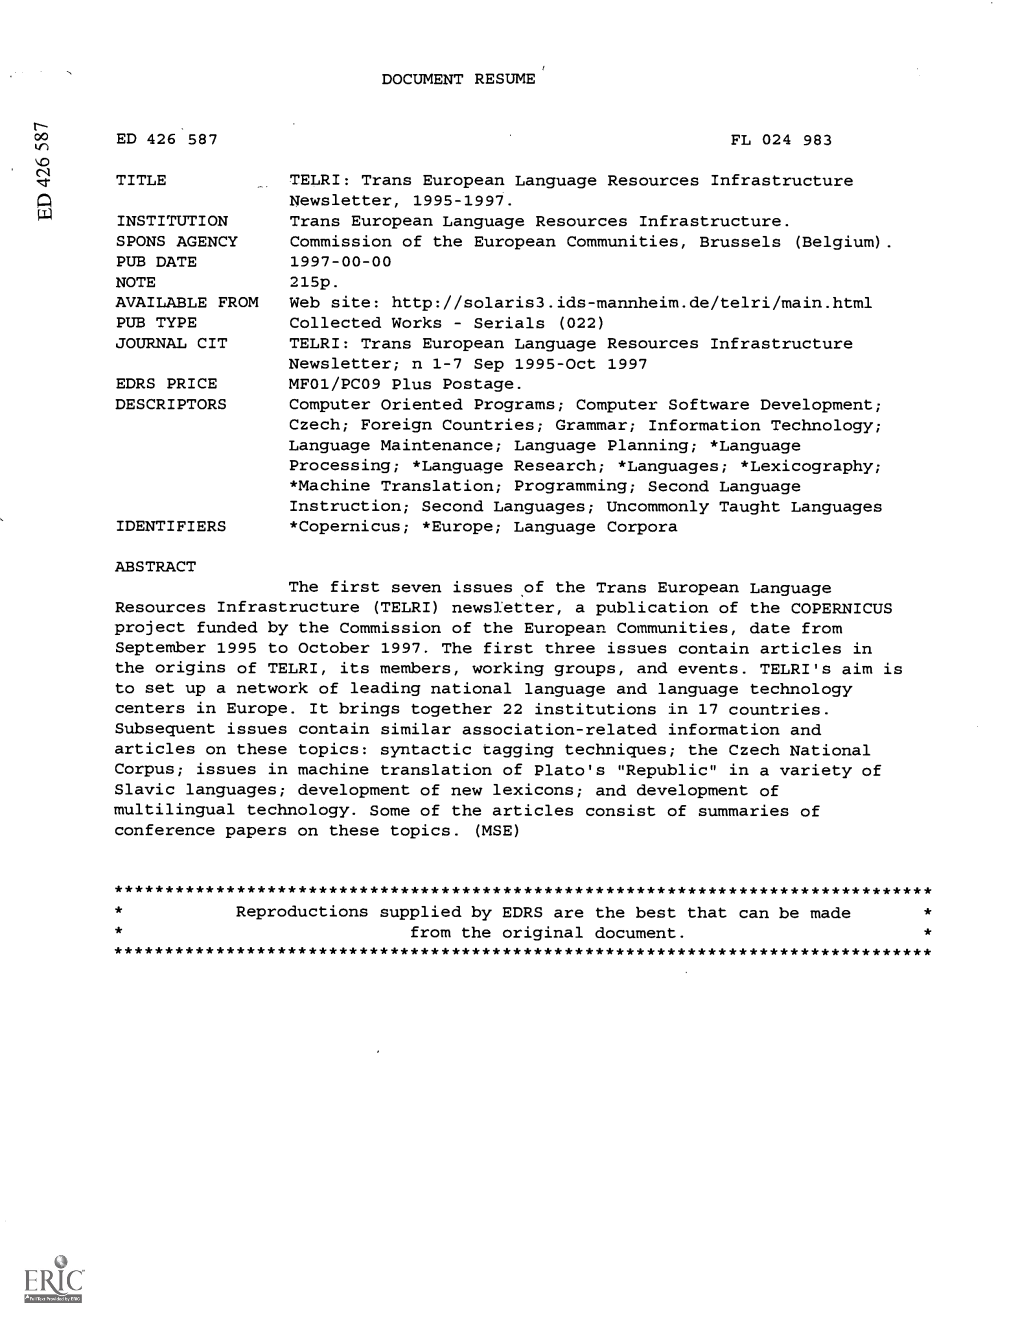 TELRI: Trans European Language Resources Infrastructure Newsletter, 1995-1997